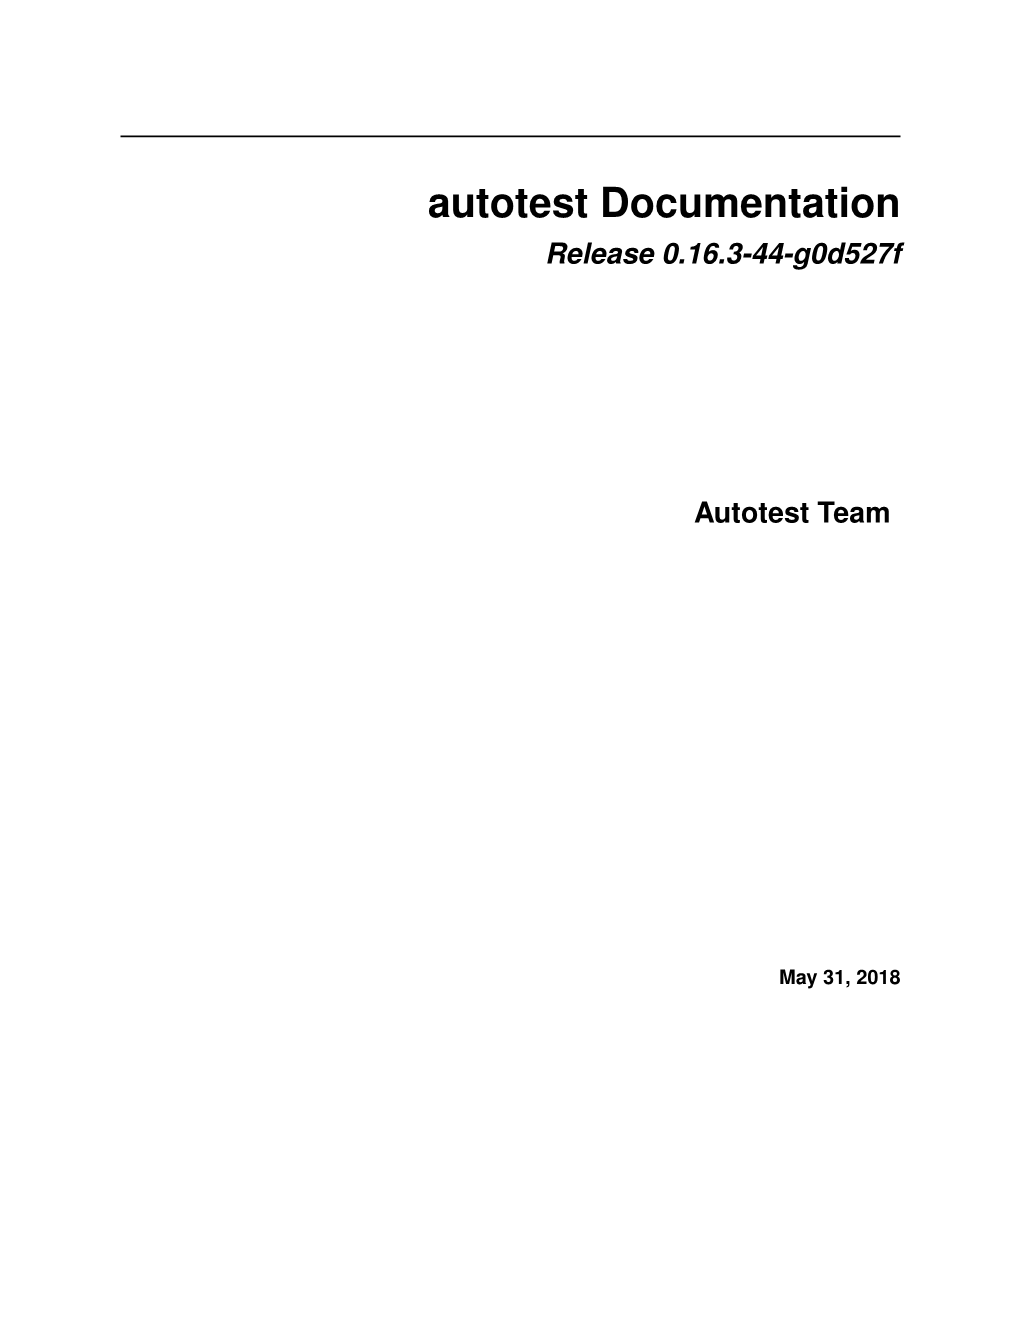 Autotest Documentation Release 0.16.3-44-G0d527f